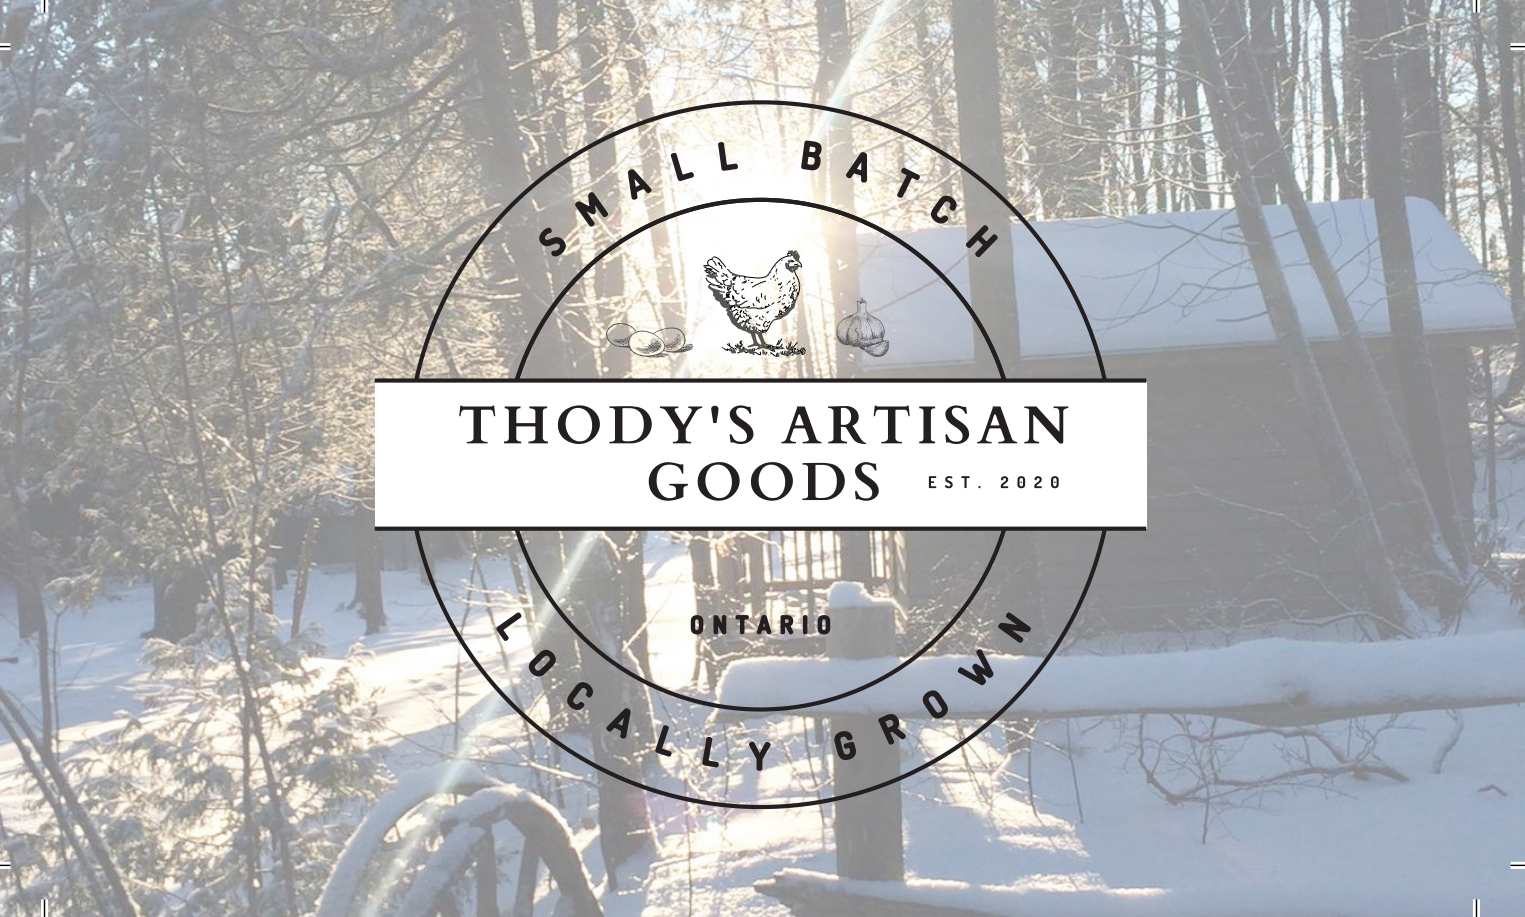 Thody's Artisan Goods  Black Garlic/Maple Syrup and Small Batch Foods –  Thody's Artisan Goods